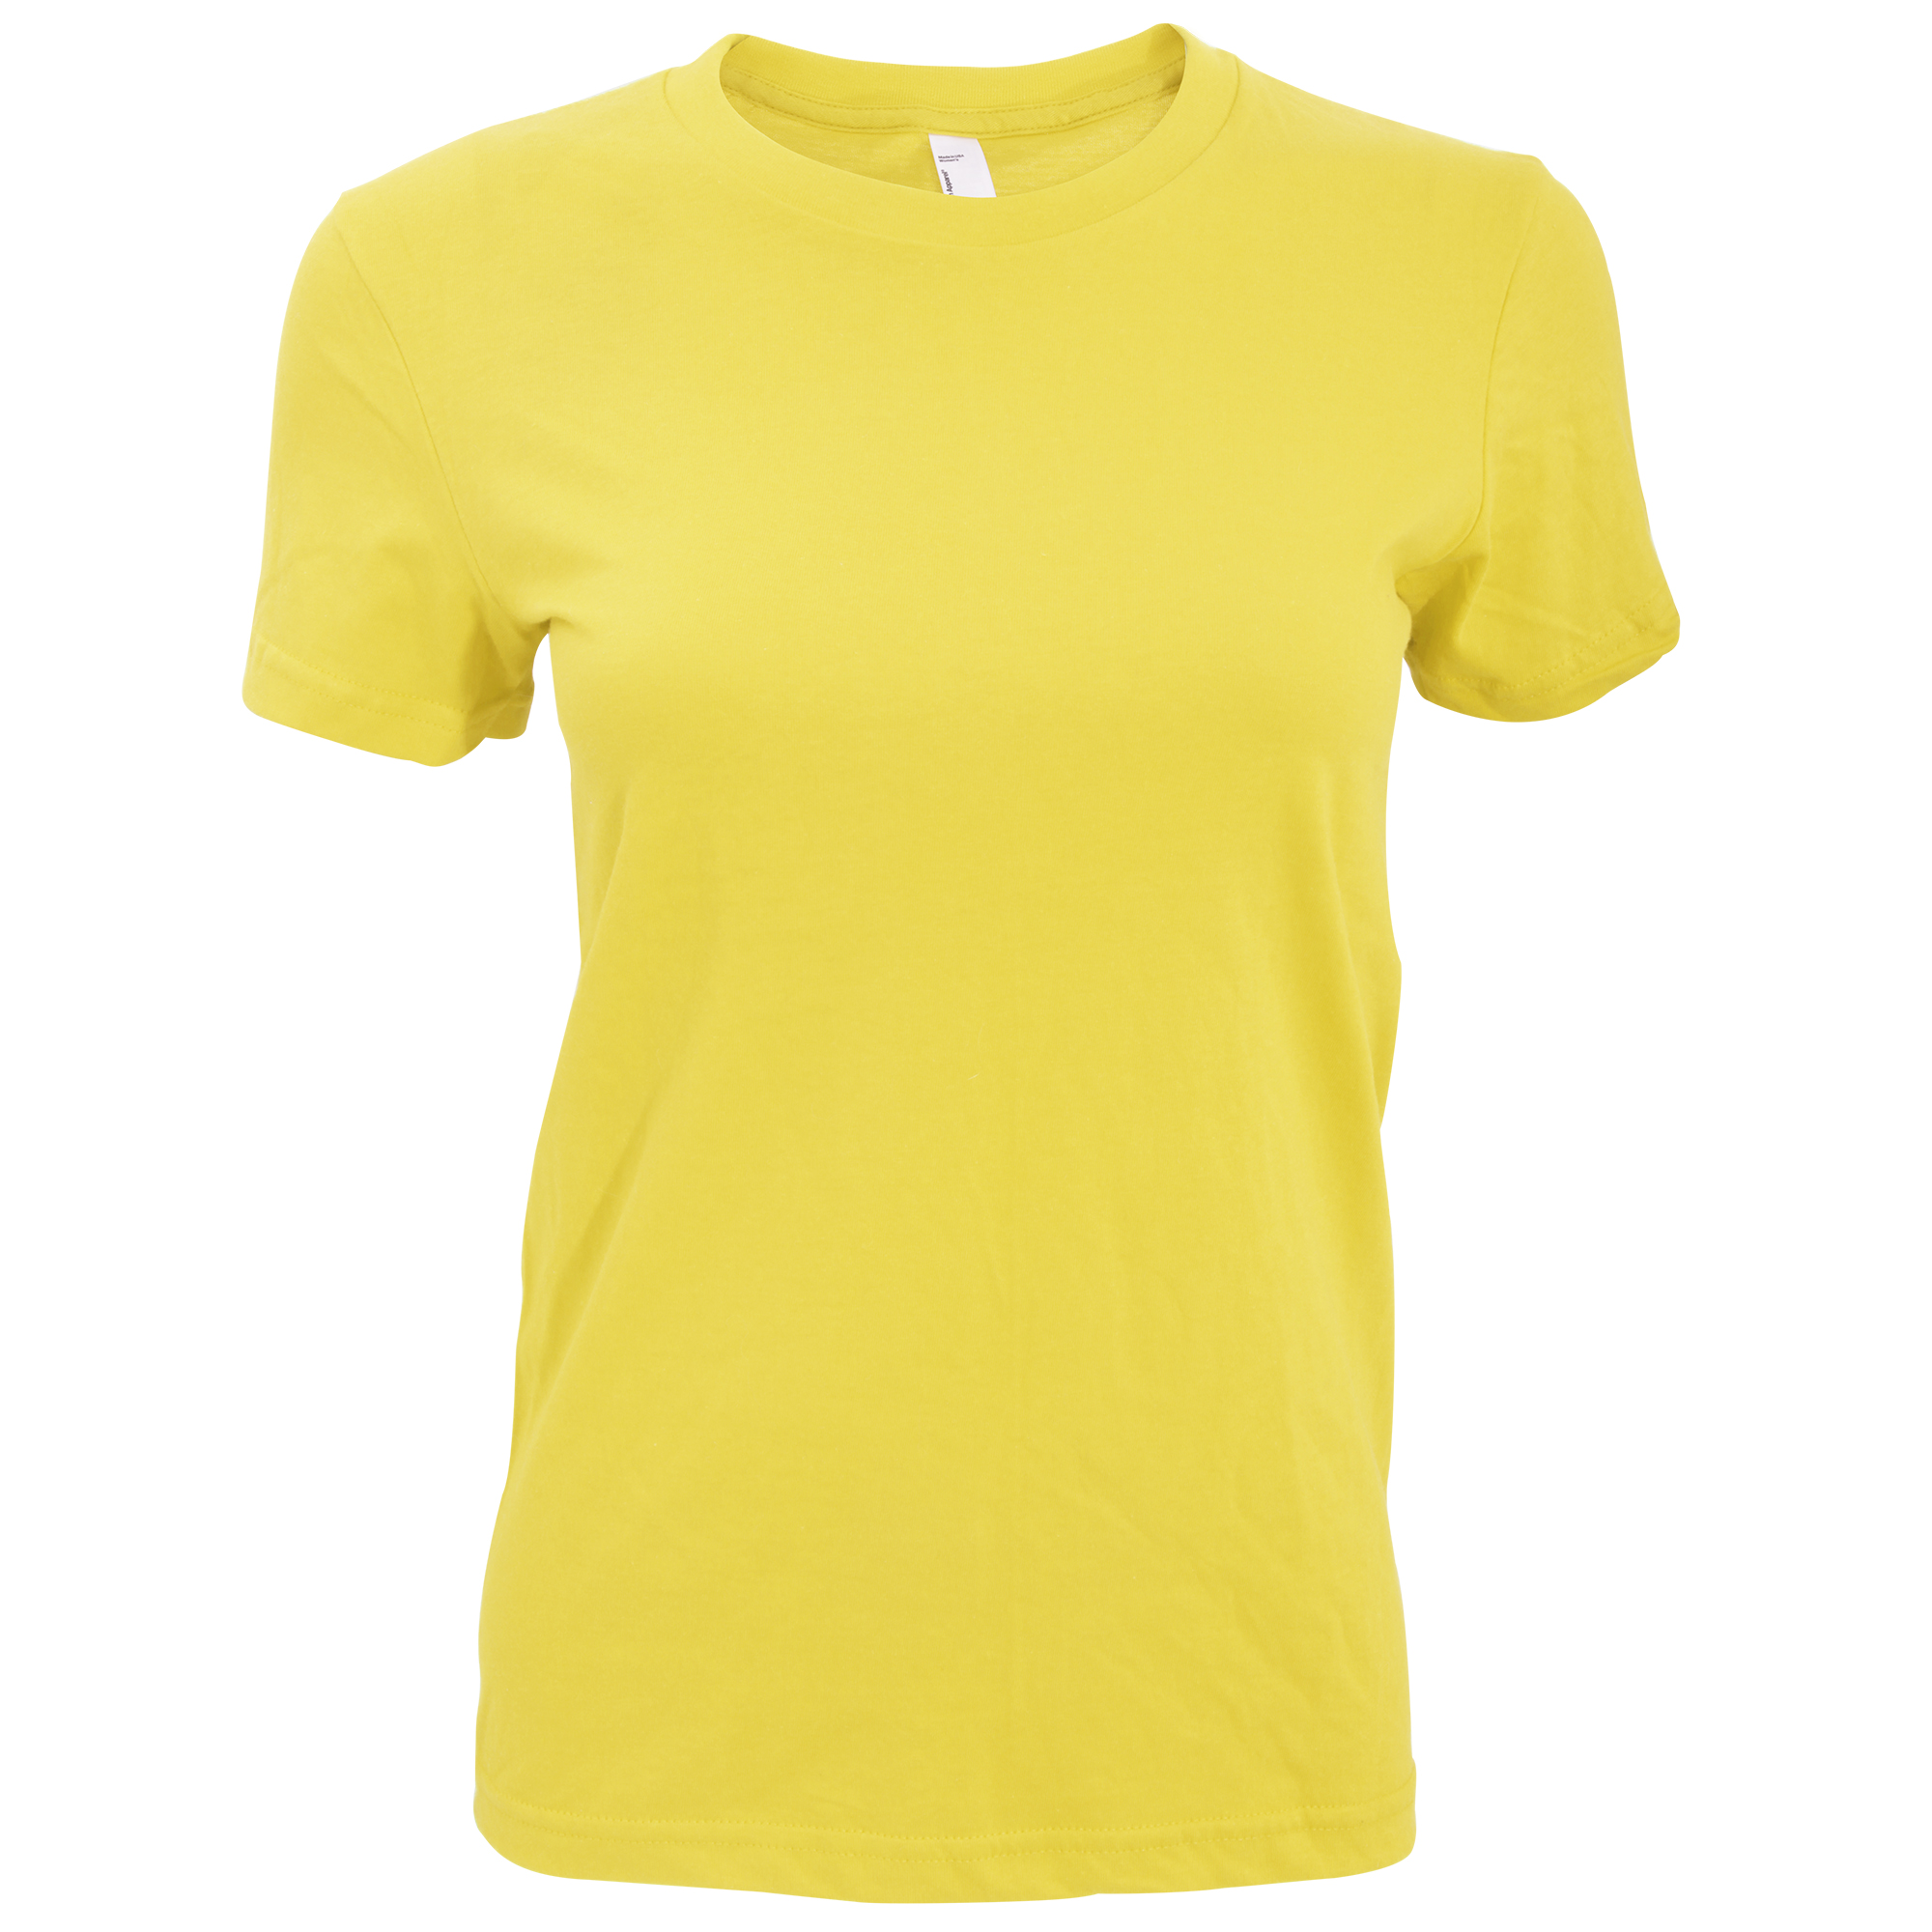 Camiseta Lisa De Manga Corta American Apparel - amarillo - 